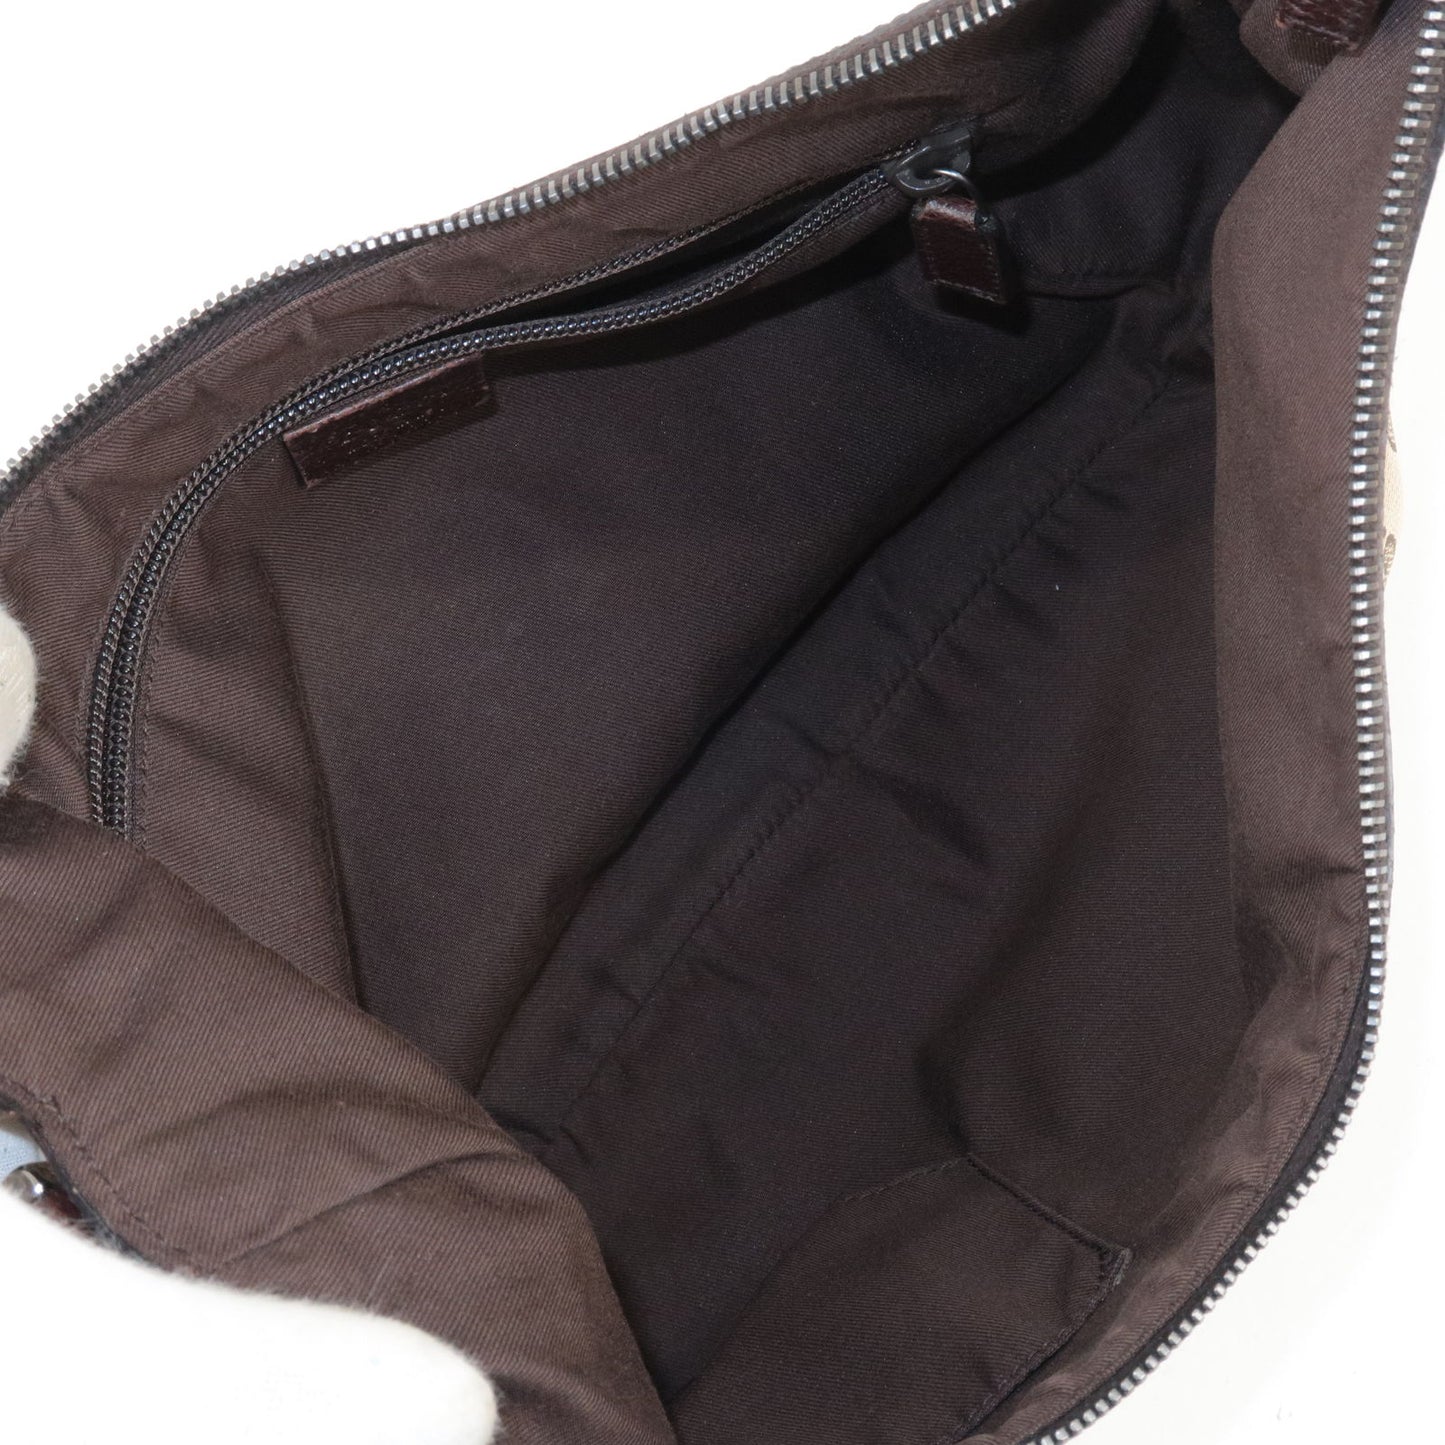 GUCCI GG Canvas Leather Shoulder Bag Beige Brown 181092